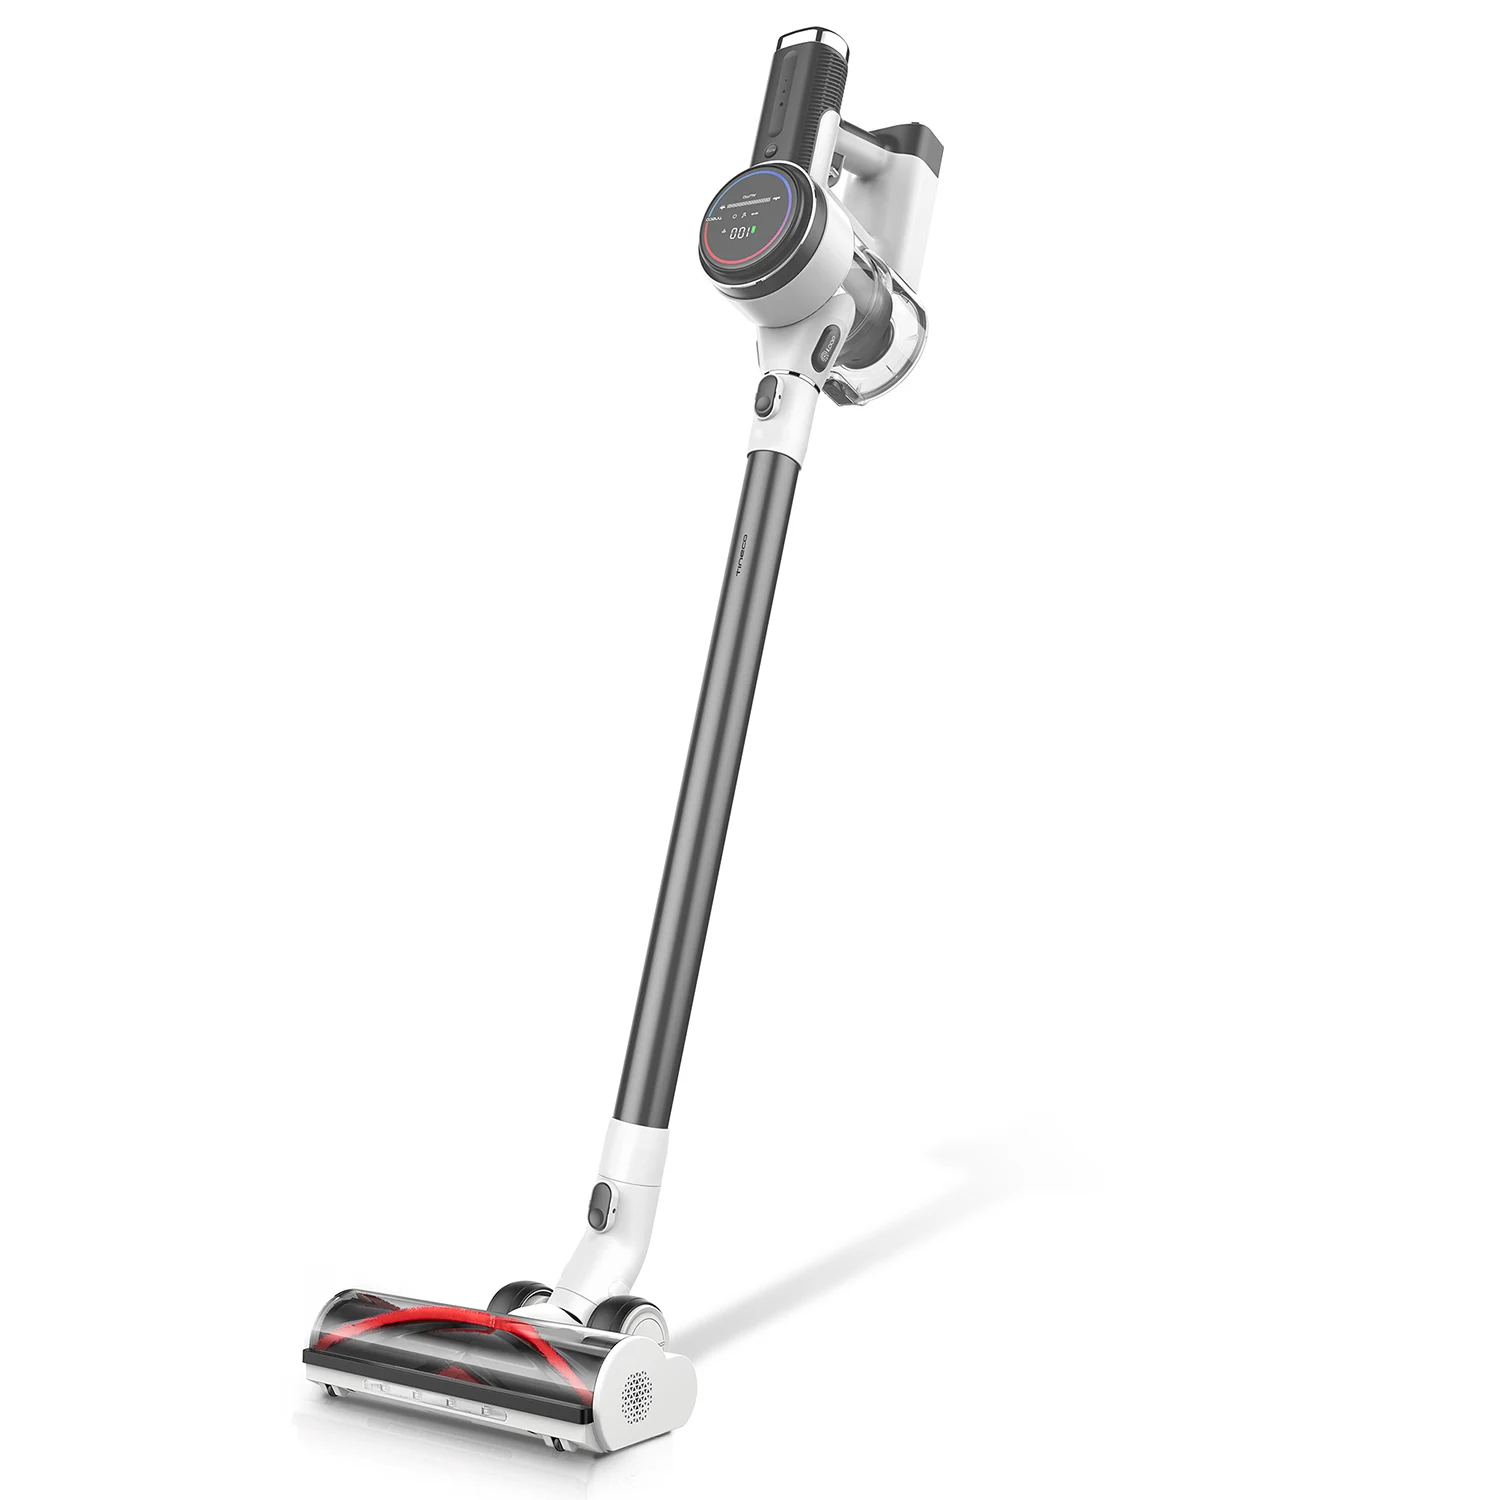 Tineco Pure One S12 Aliexpress Vacuum Powerful Cleaner Cordless Cordless S12 | - - Vacuum Cleaner